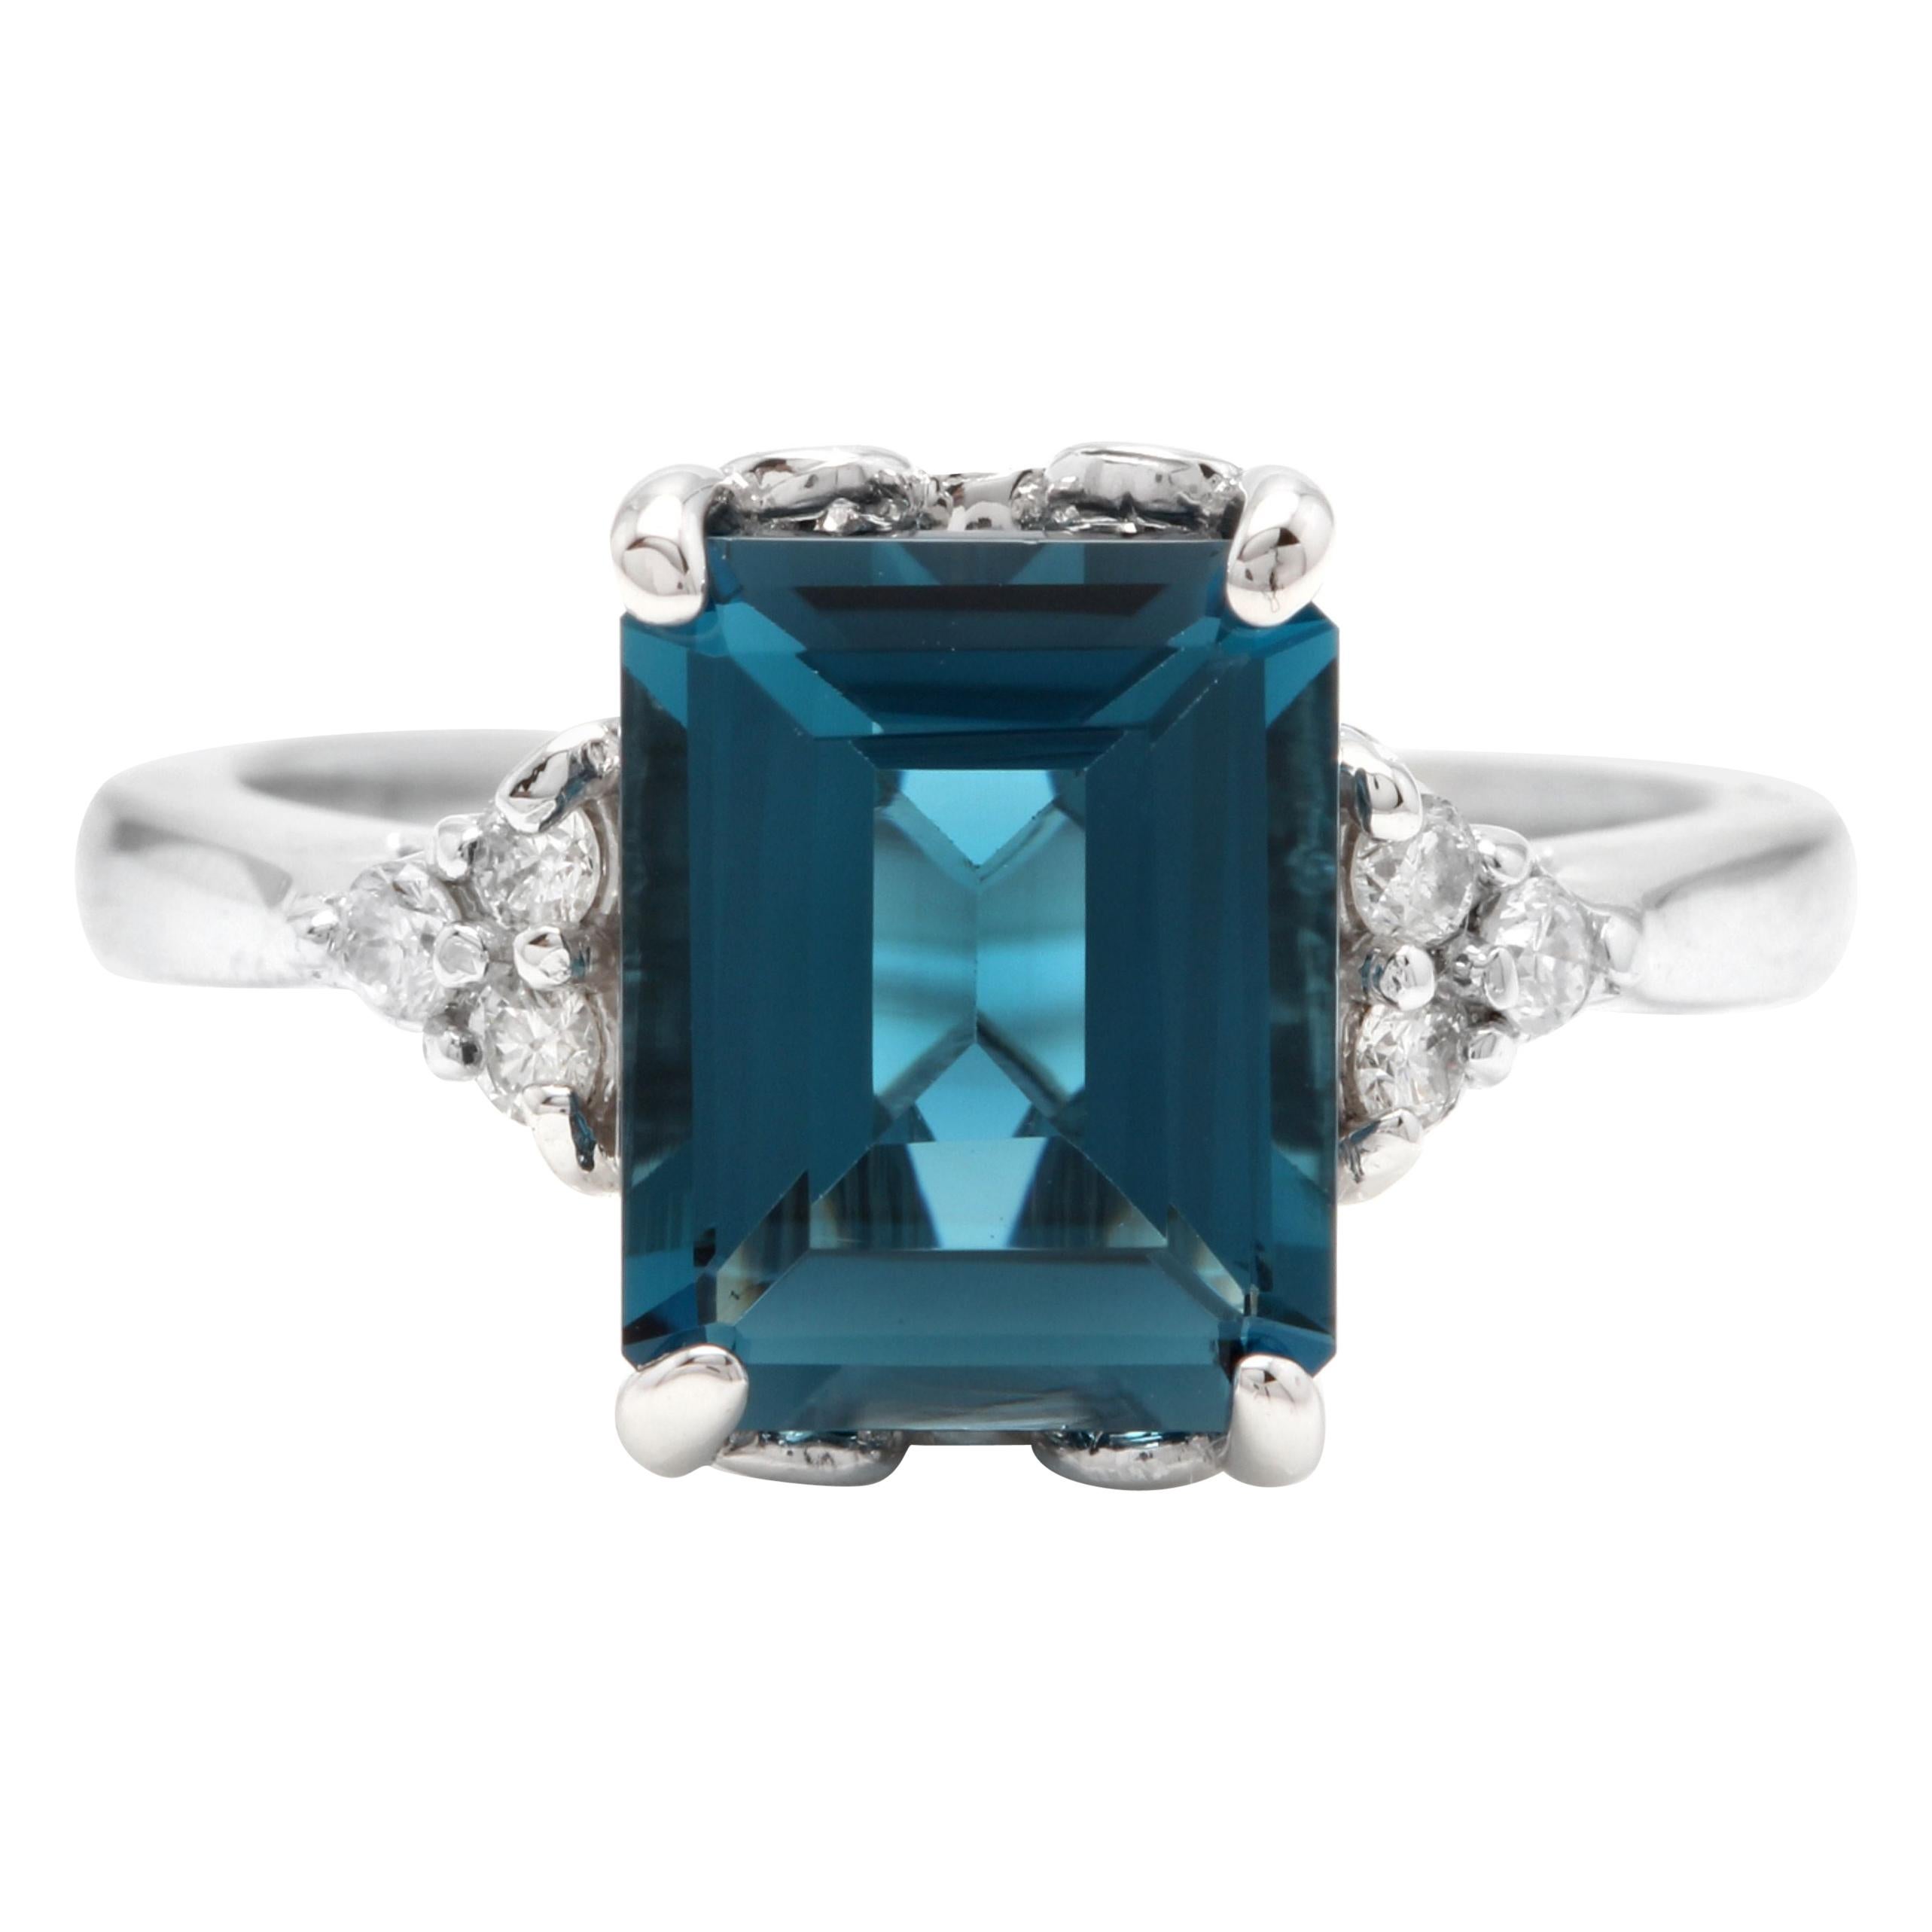 3.85 Carat Natural Impressive London Blue Topaz and Diamond 14K White Gold Ring